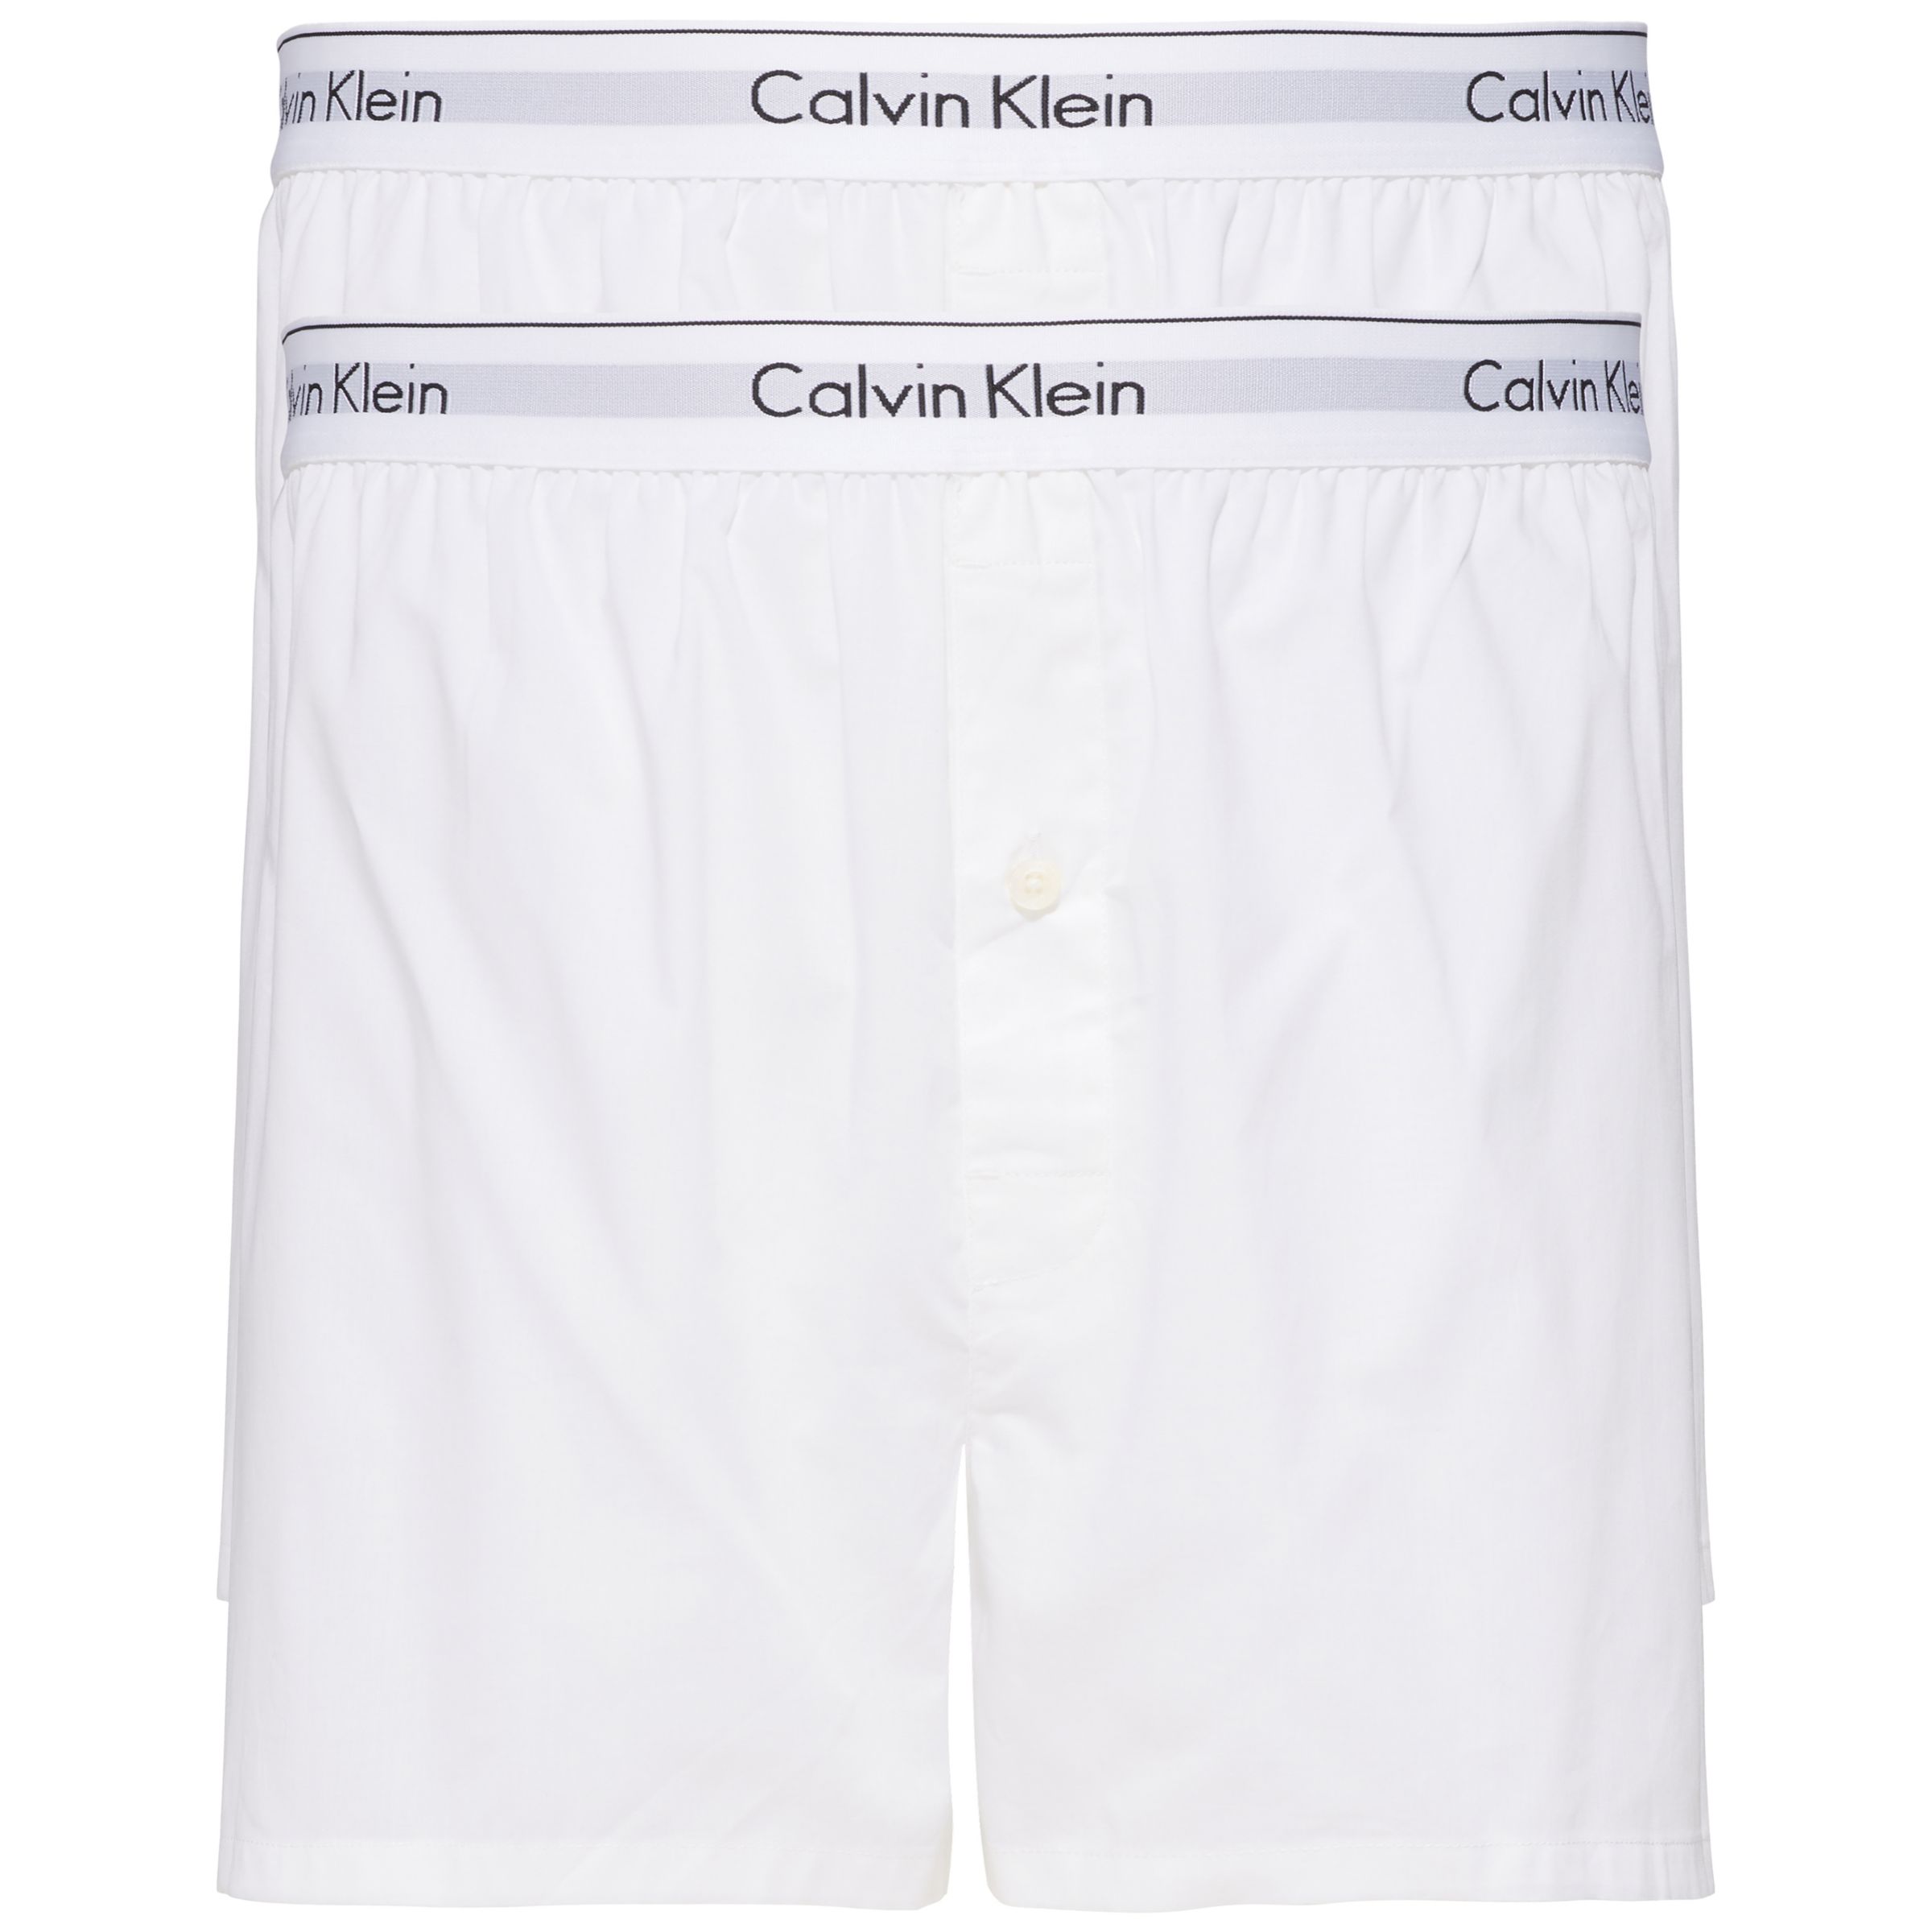 Calvin Klein Modern Cotton Slim Fit Boxers, Pack of 2, White at John ...